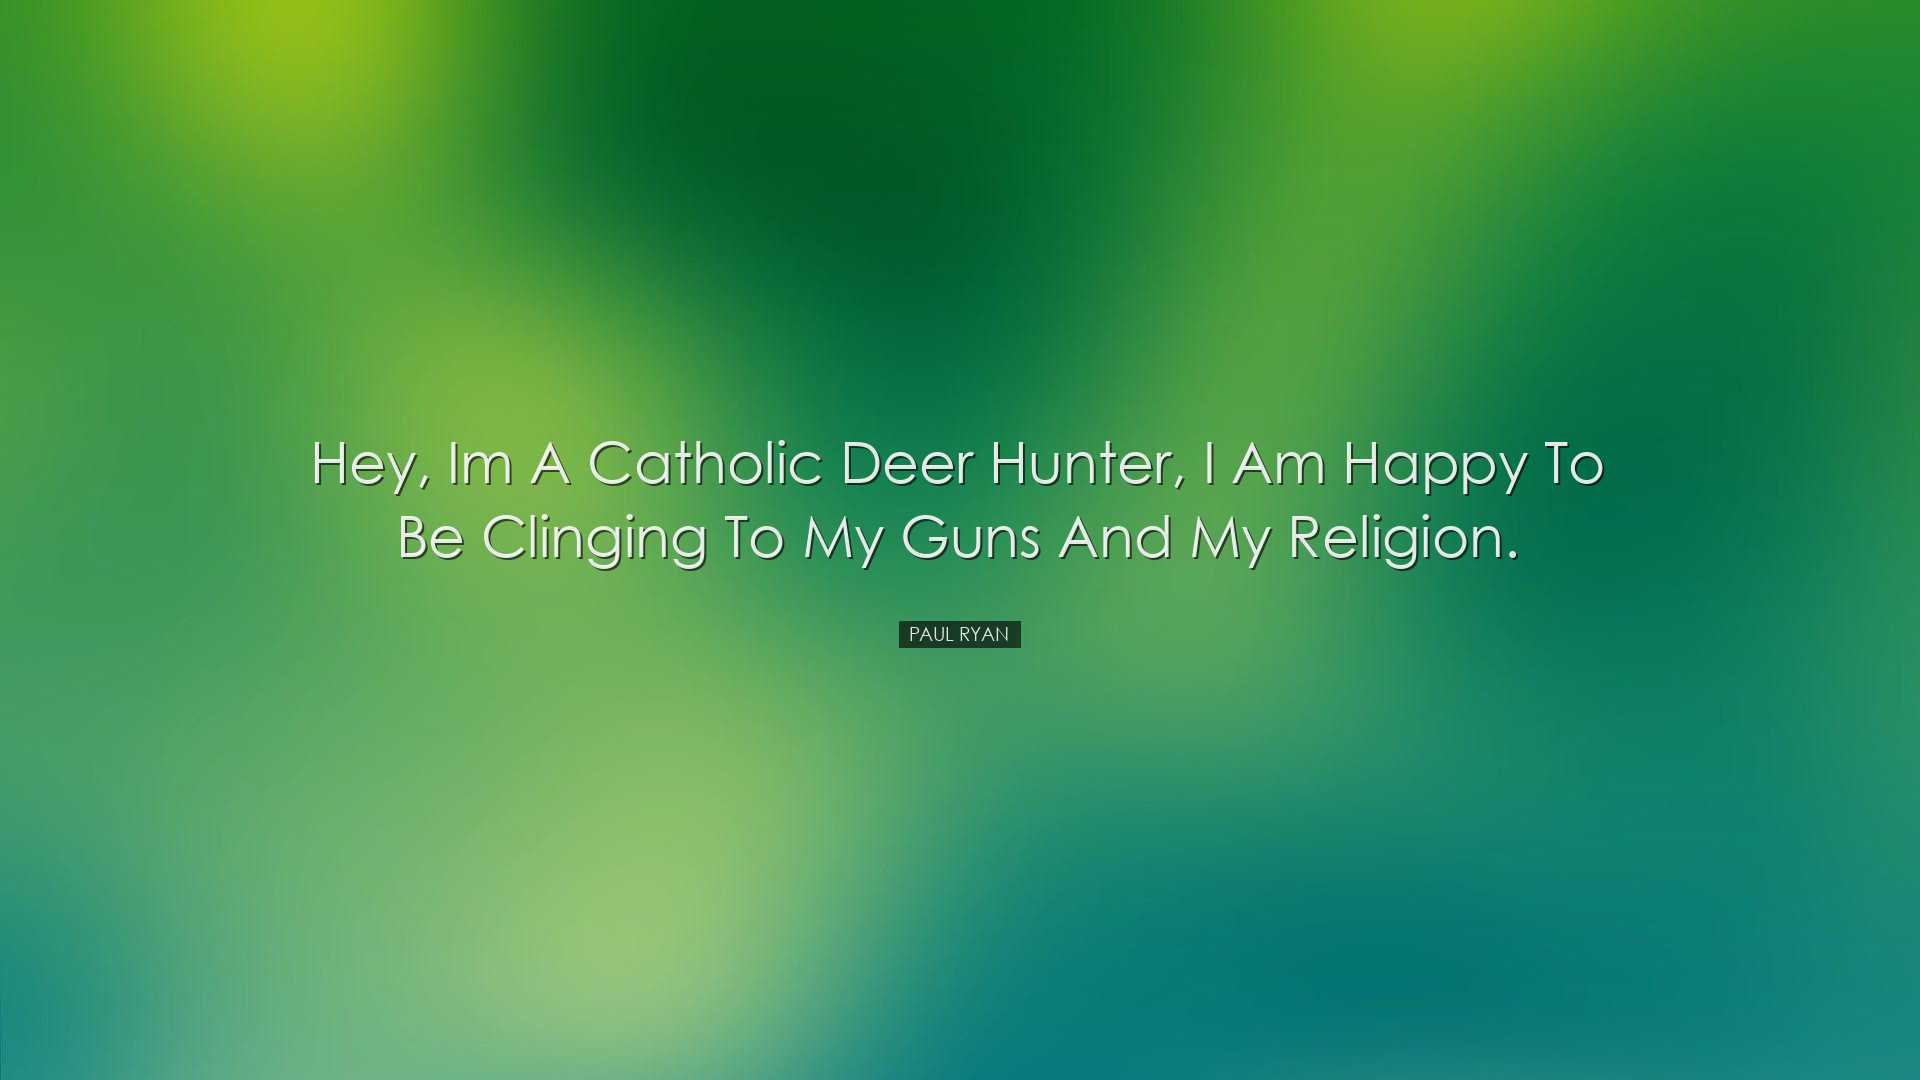 Hey, Im a Catholic deer hunter, I am happy to be clinging to my gu